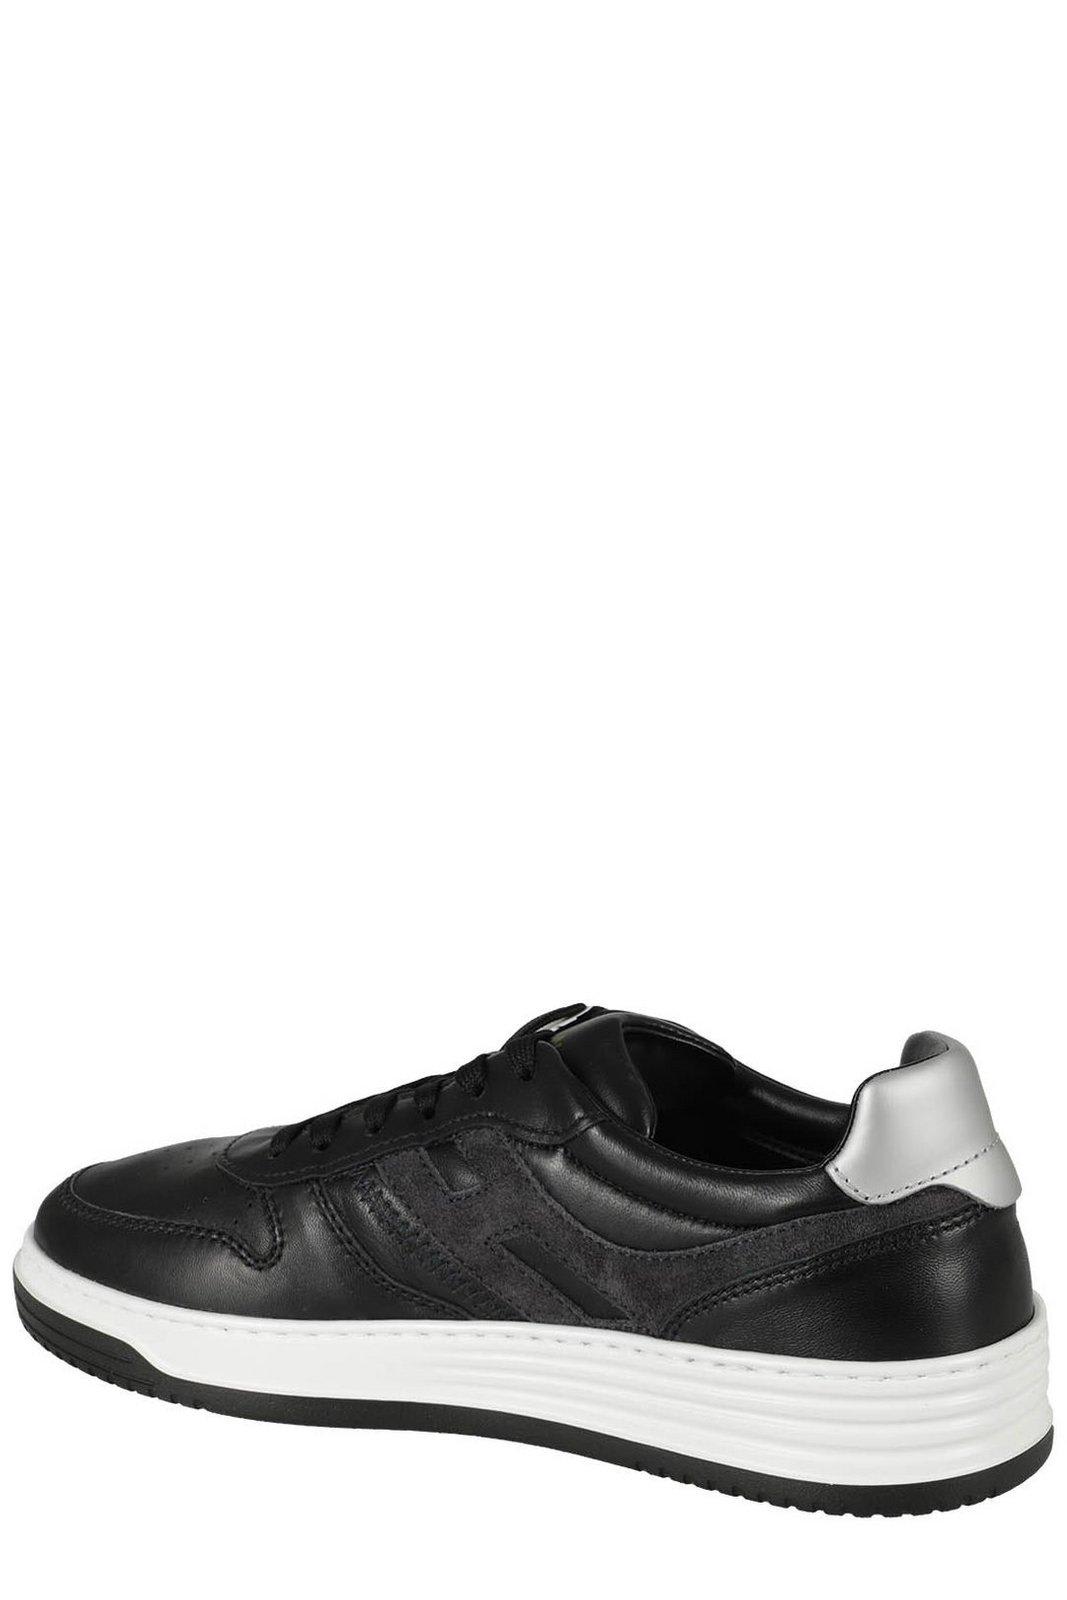 Shop Hogan Round Toe Low Top Sneakers In Black